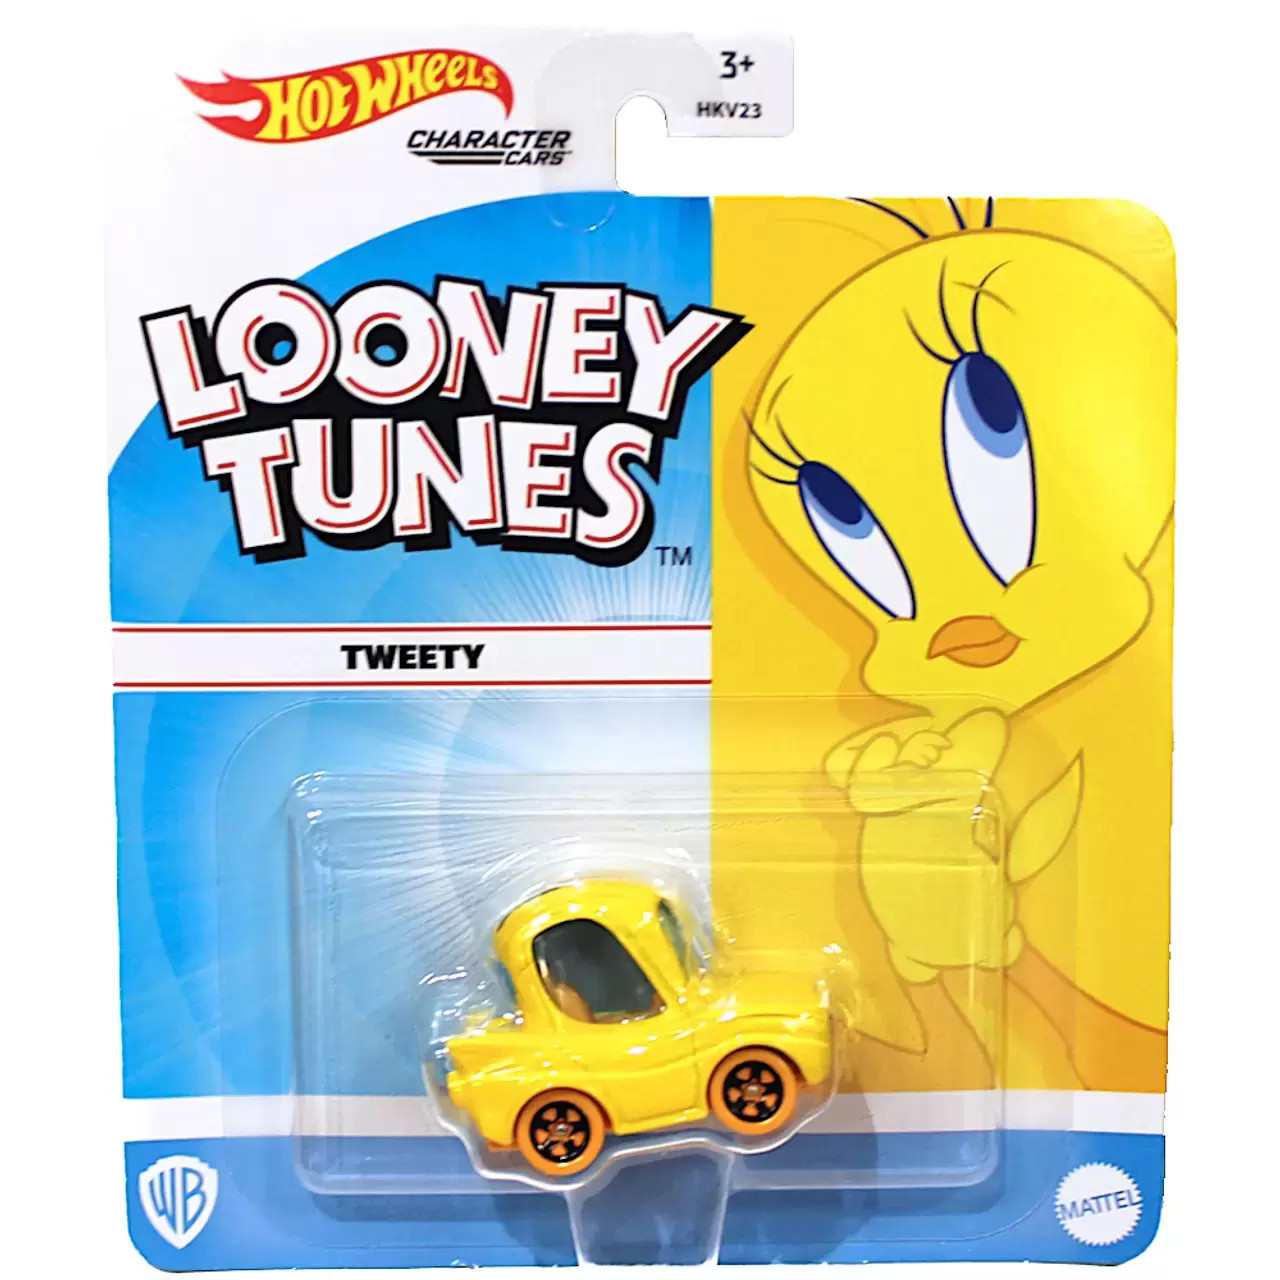 Looney Tunes Character Cars - Tweety